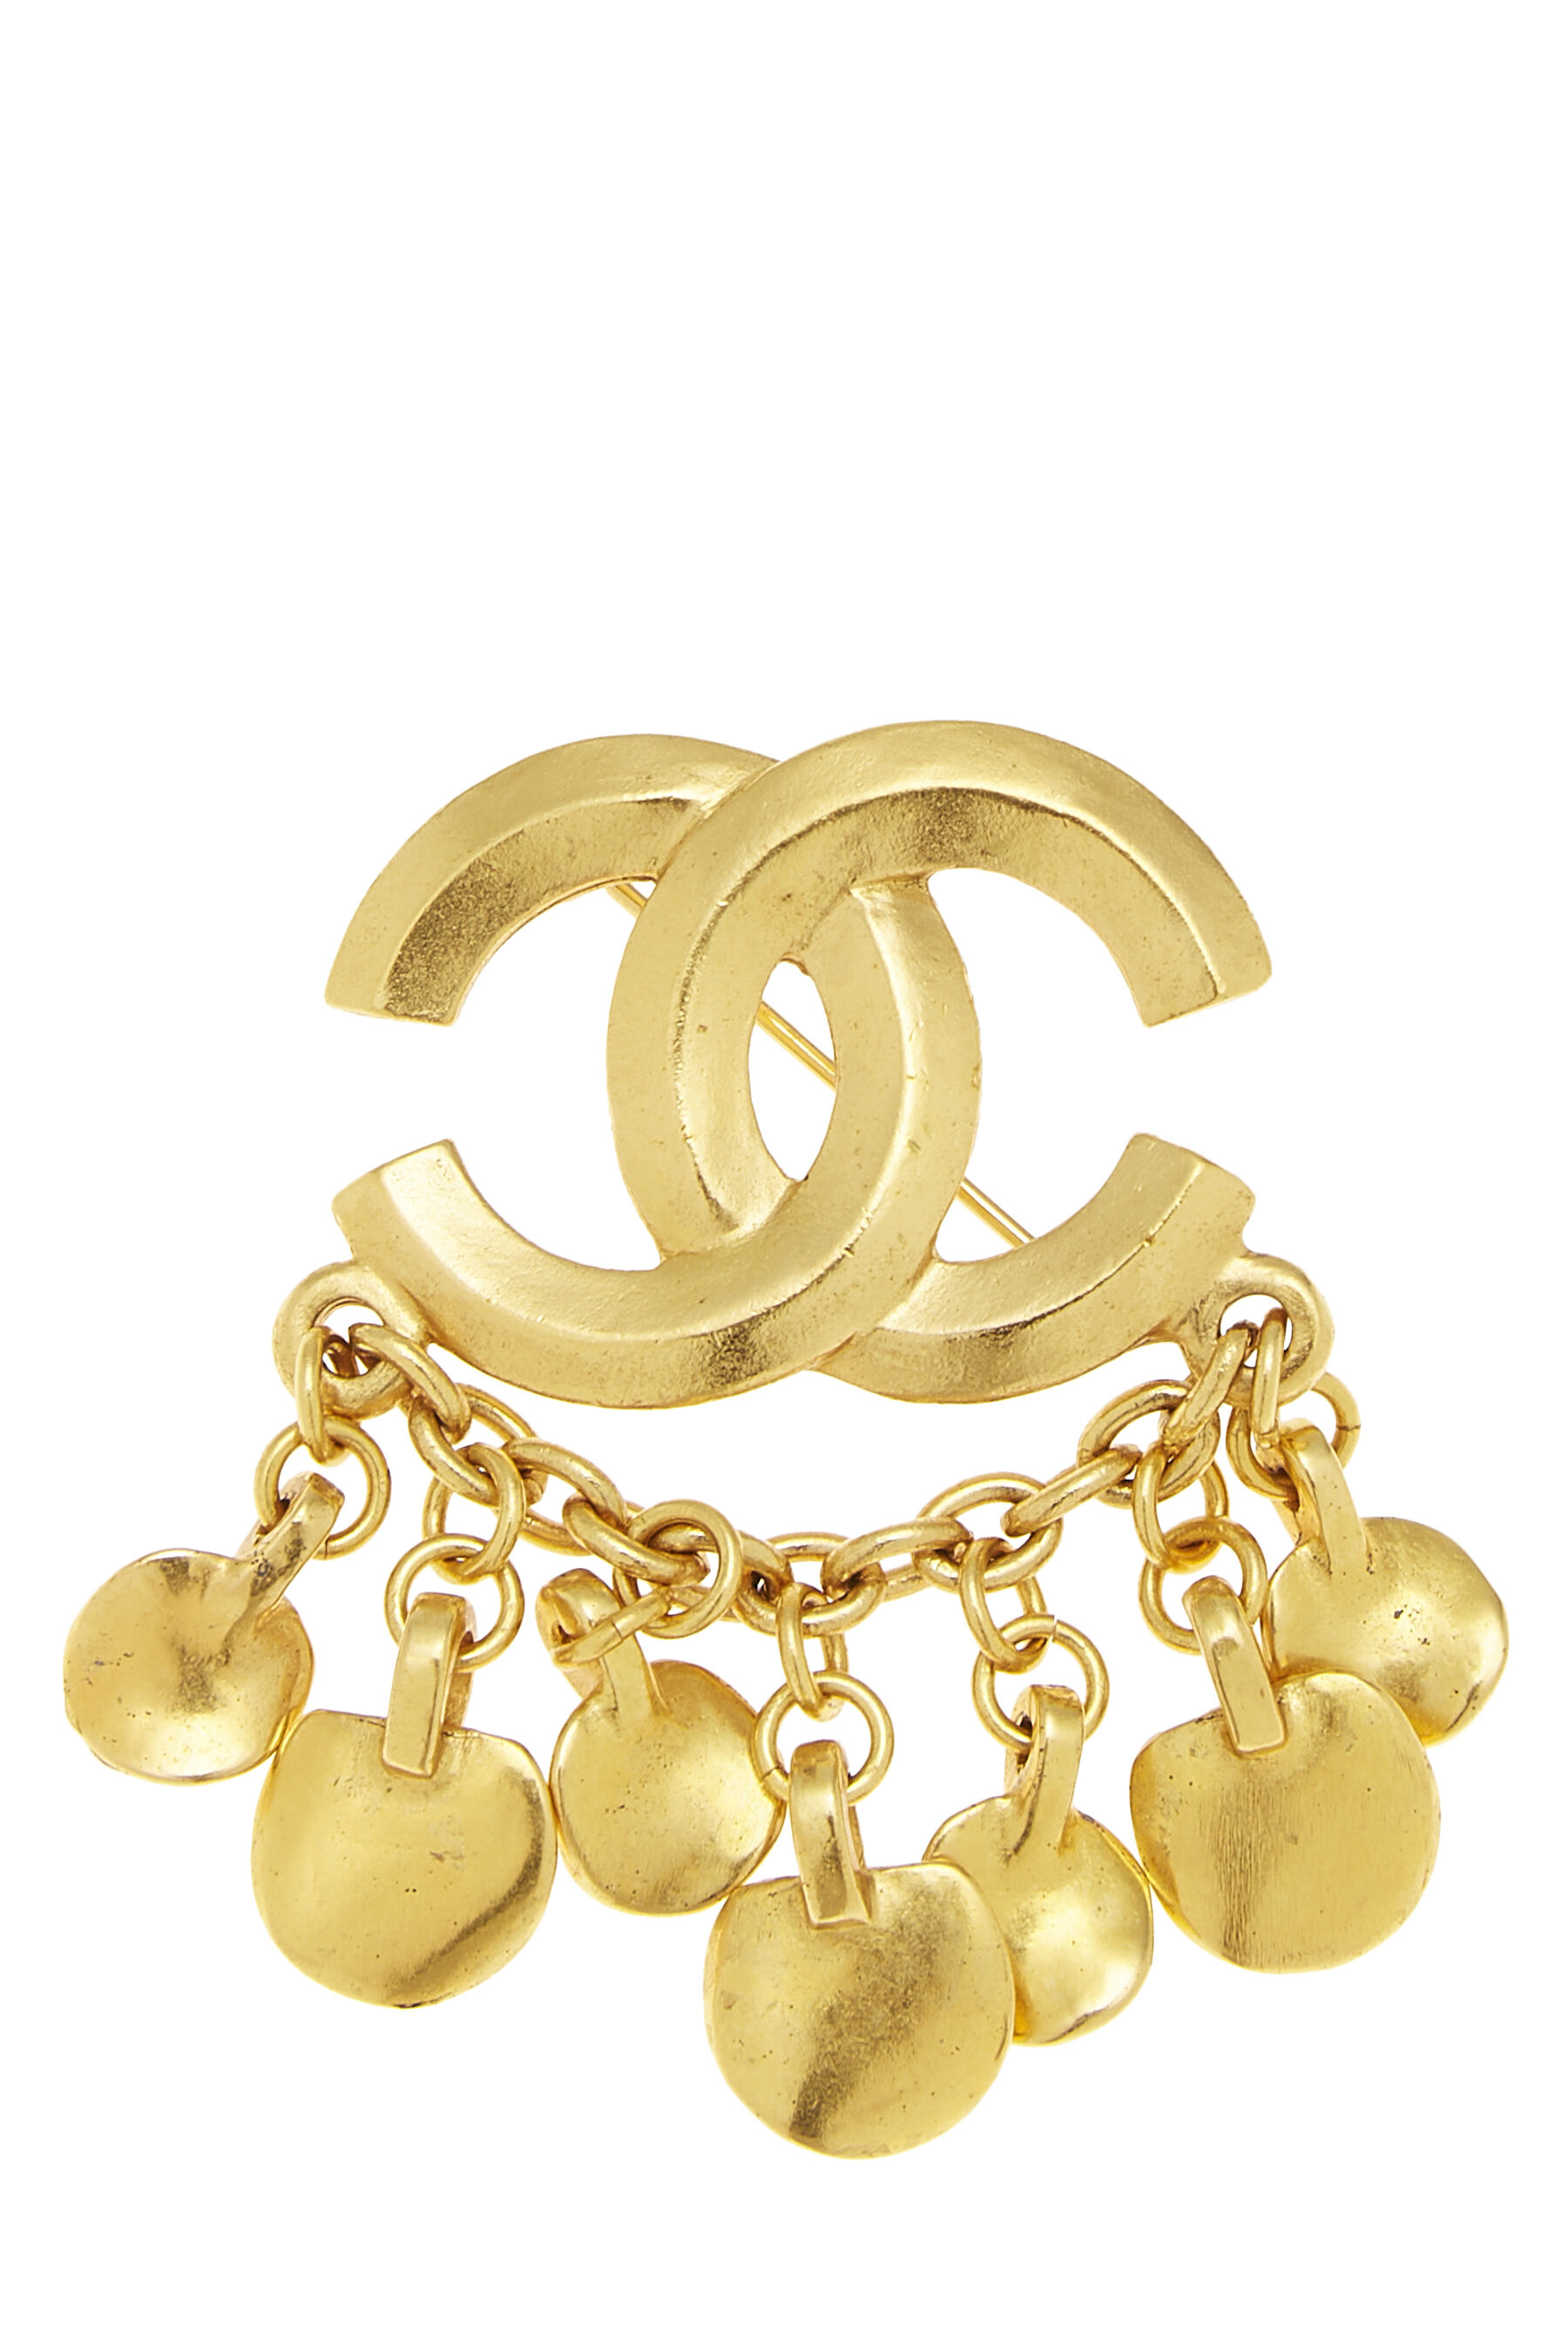 Chanel gold and black - Gem